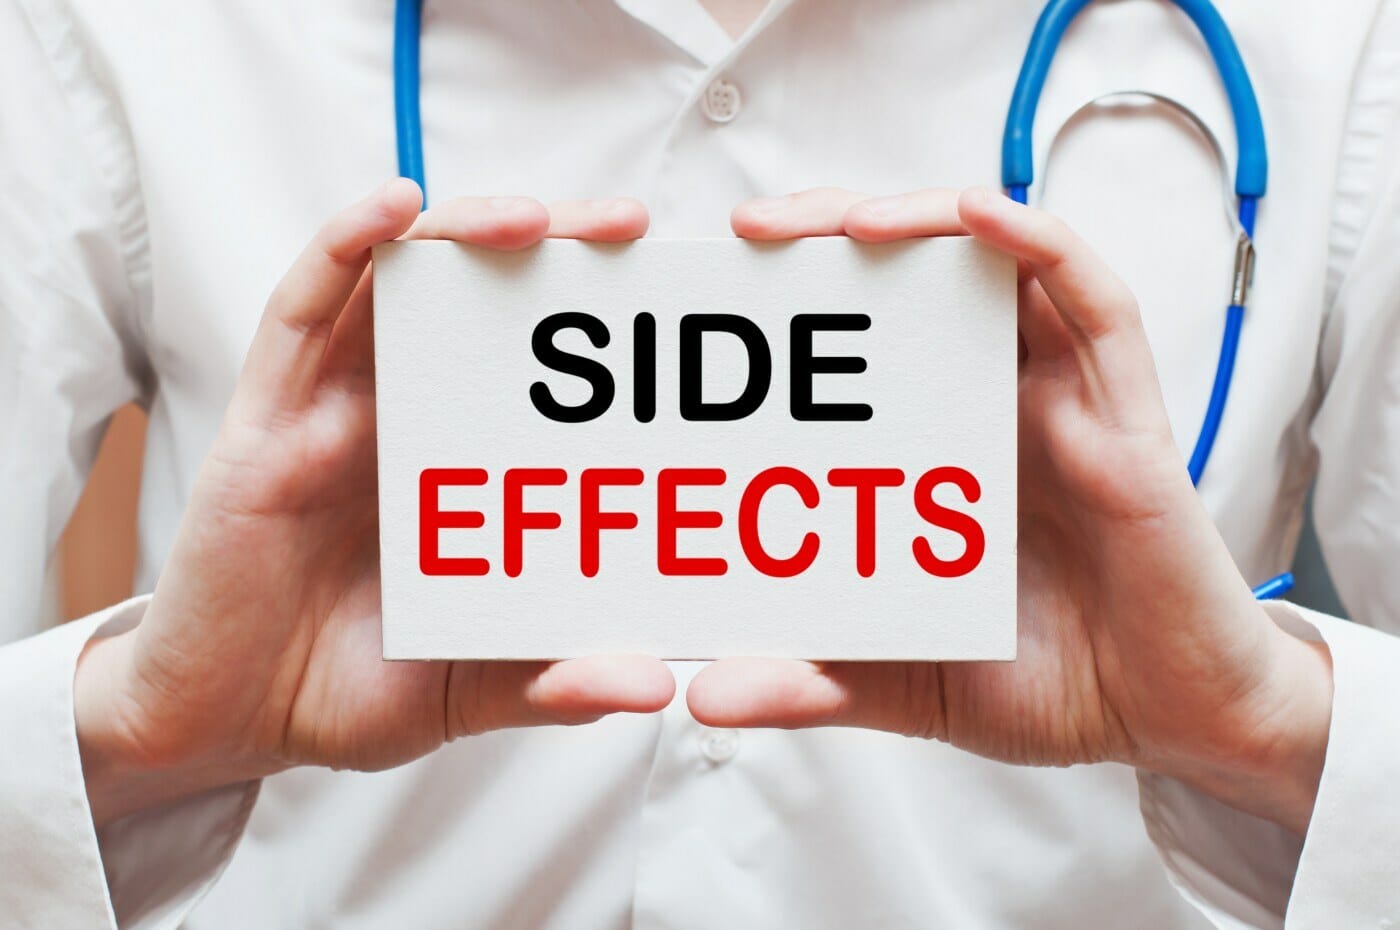 Statinn side effects image